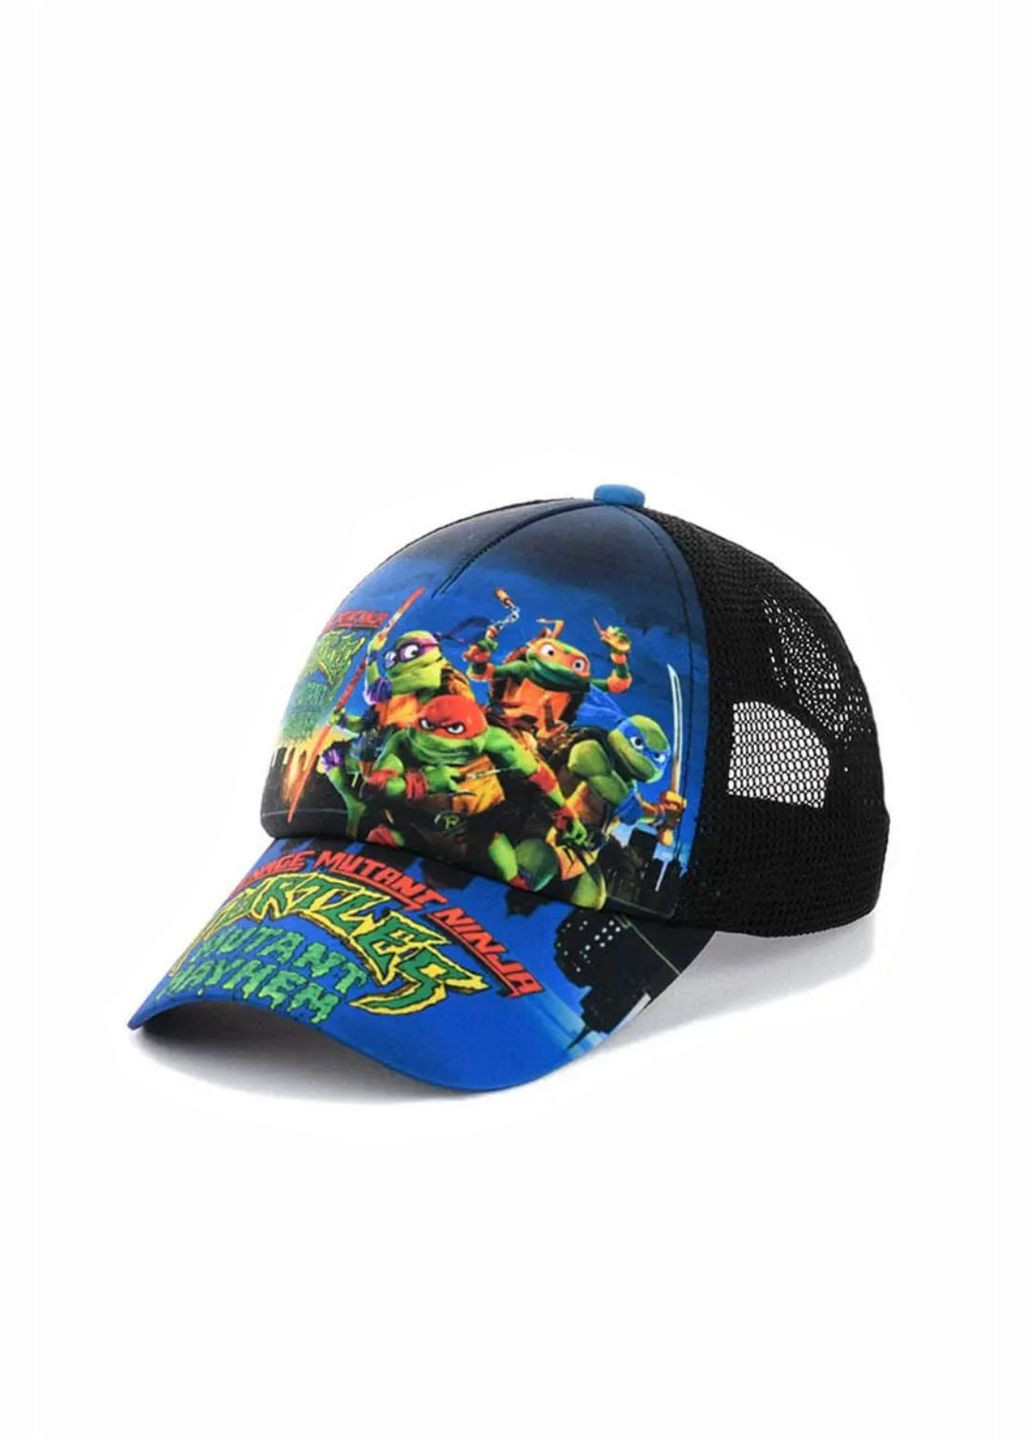 Кепка детская с сеткой Подростки-мутанты Черепашки-ниндзя / Teenage Mutant Hero Turtles No Brand дитяча кепка (279381225)